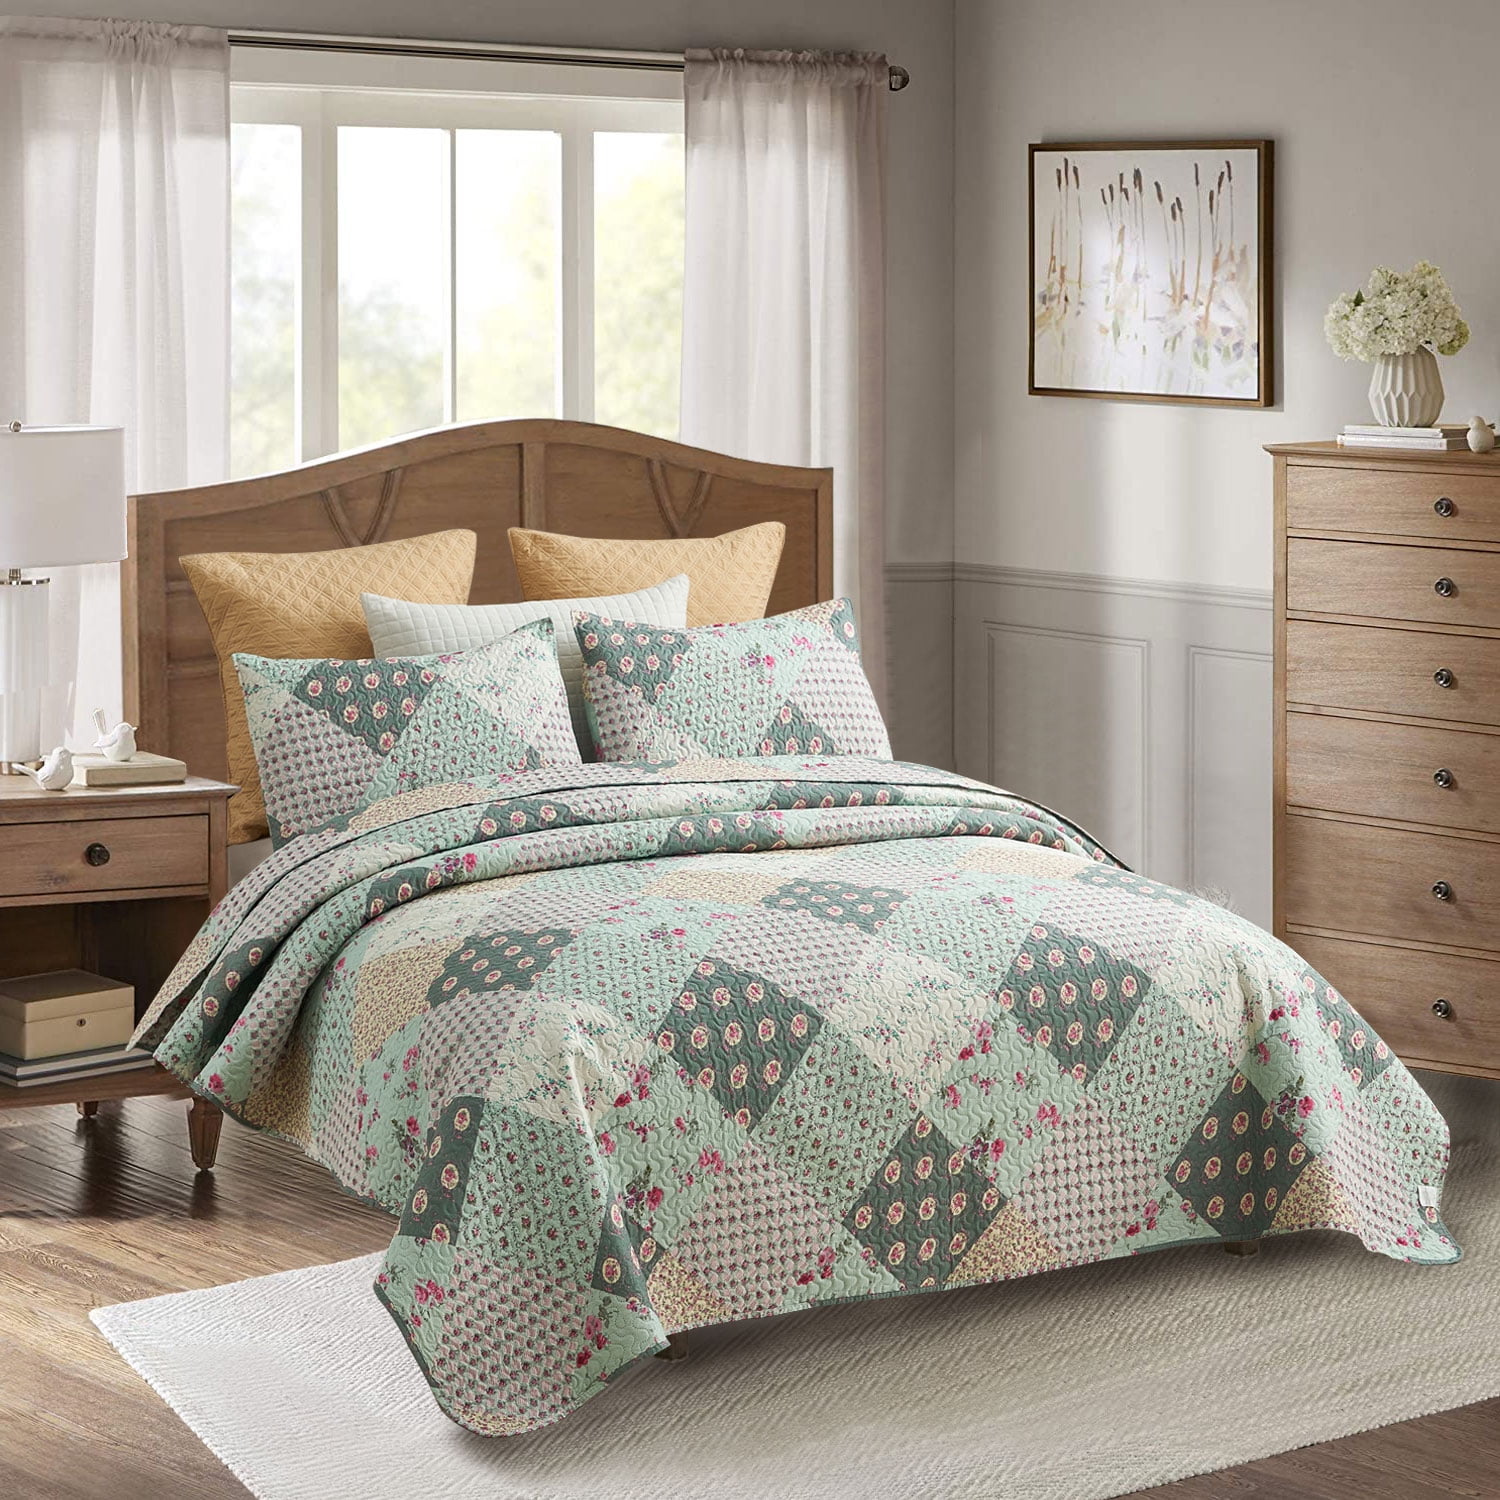 Details about   Floral Pattern Printed Quilt Set Coverlet  All Season Microfiber Bedspread Set 